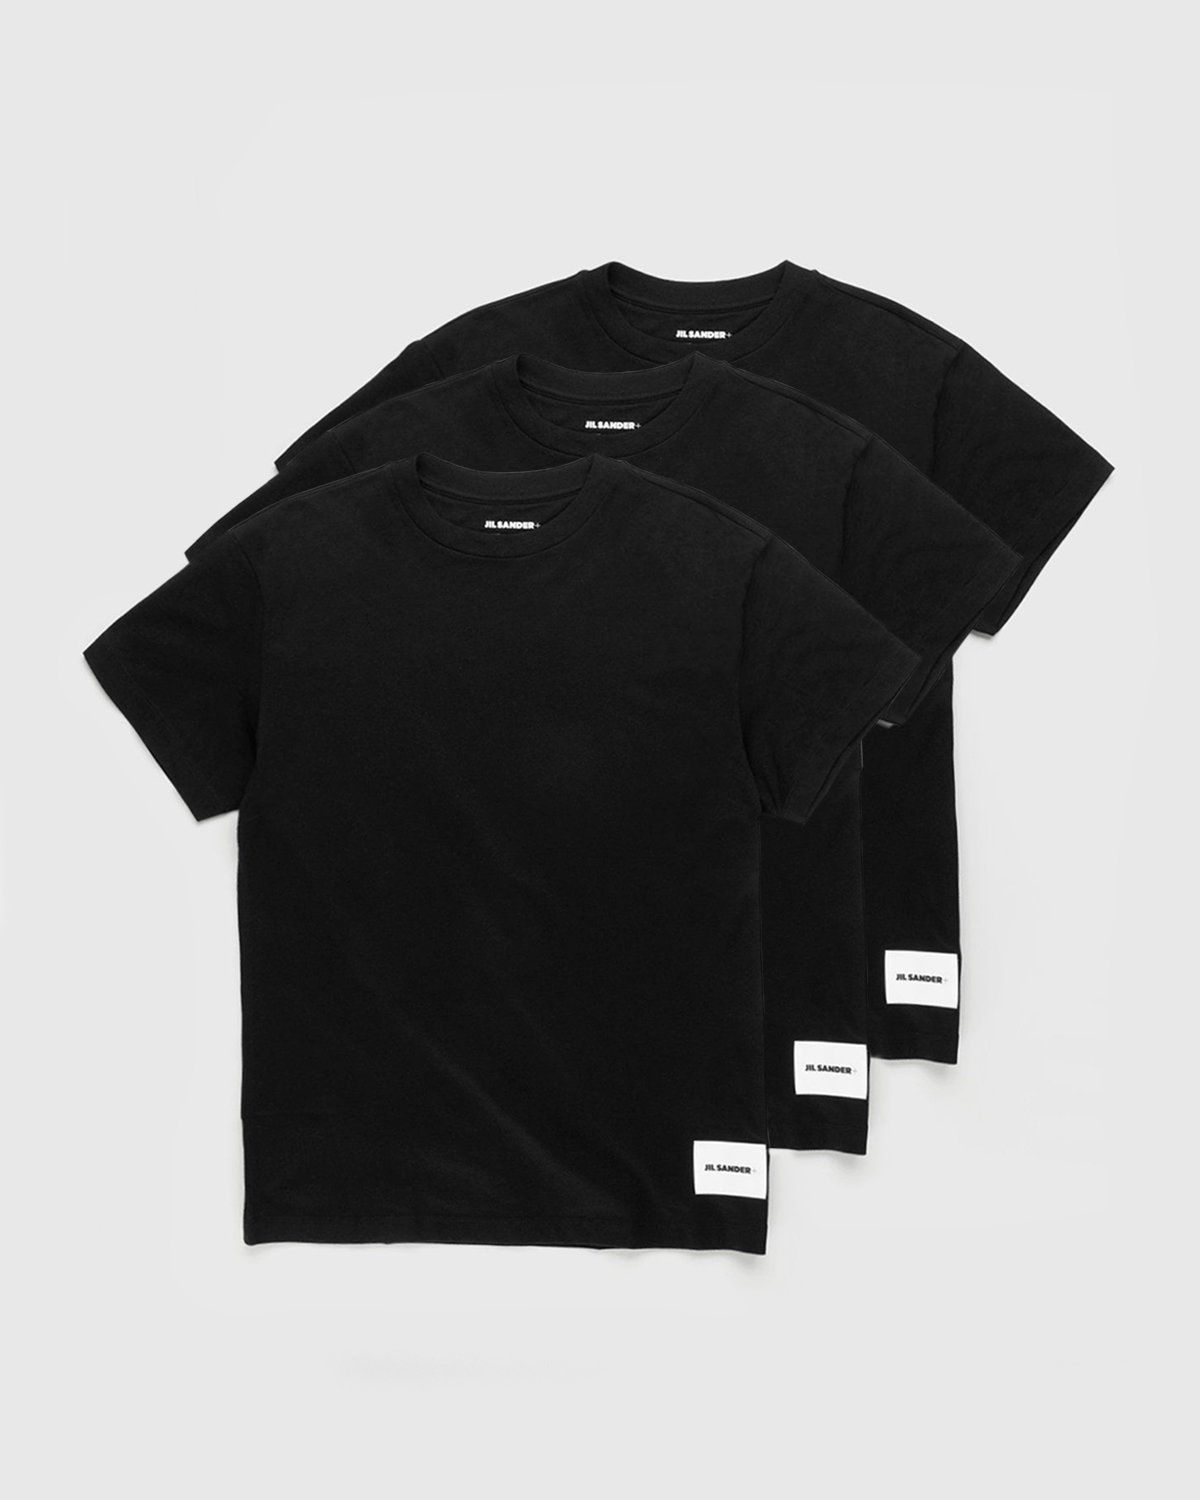 Jil Sander – T-Shirt 3-Pack Black - T-Shirts - Black - Image 1